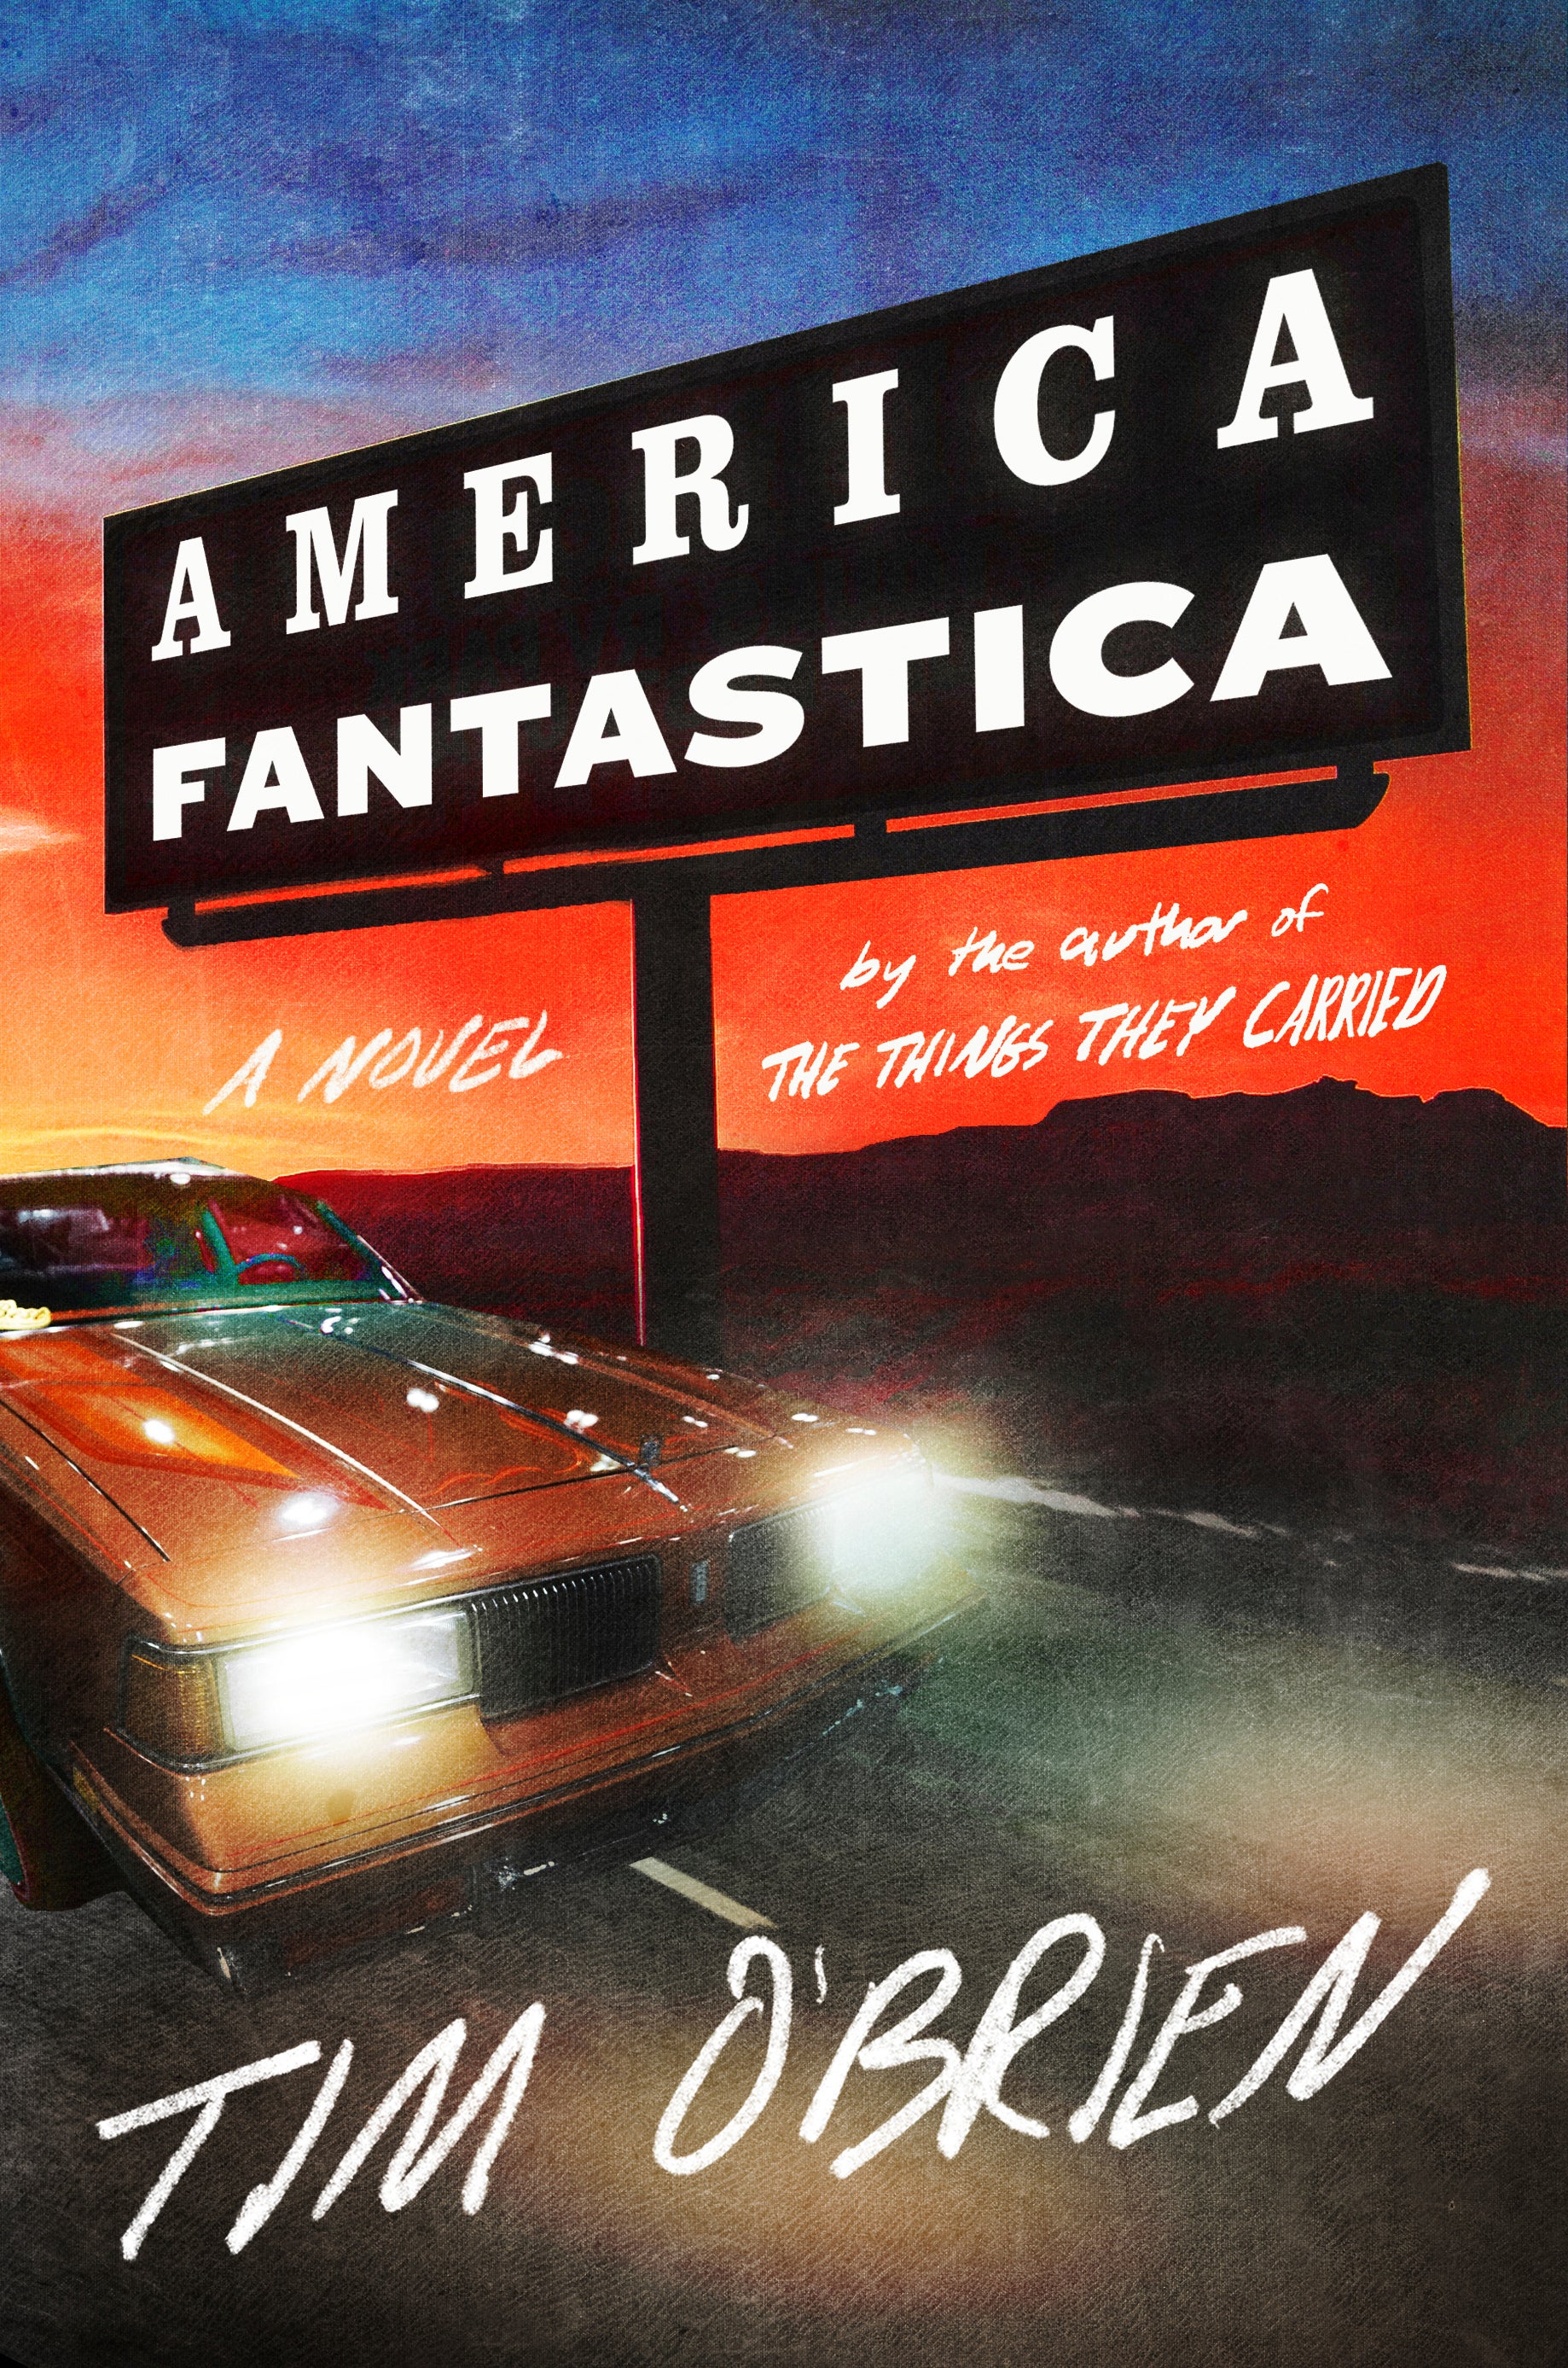 Book Review - America Fantastica